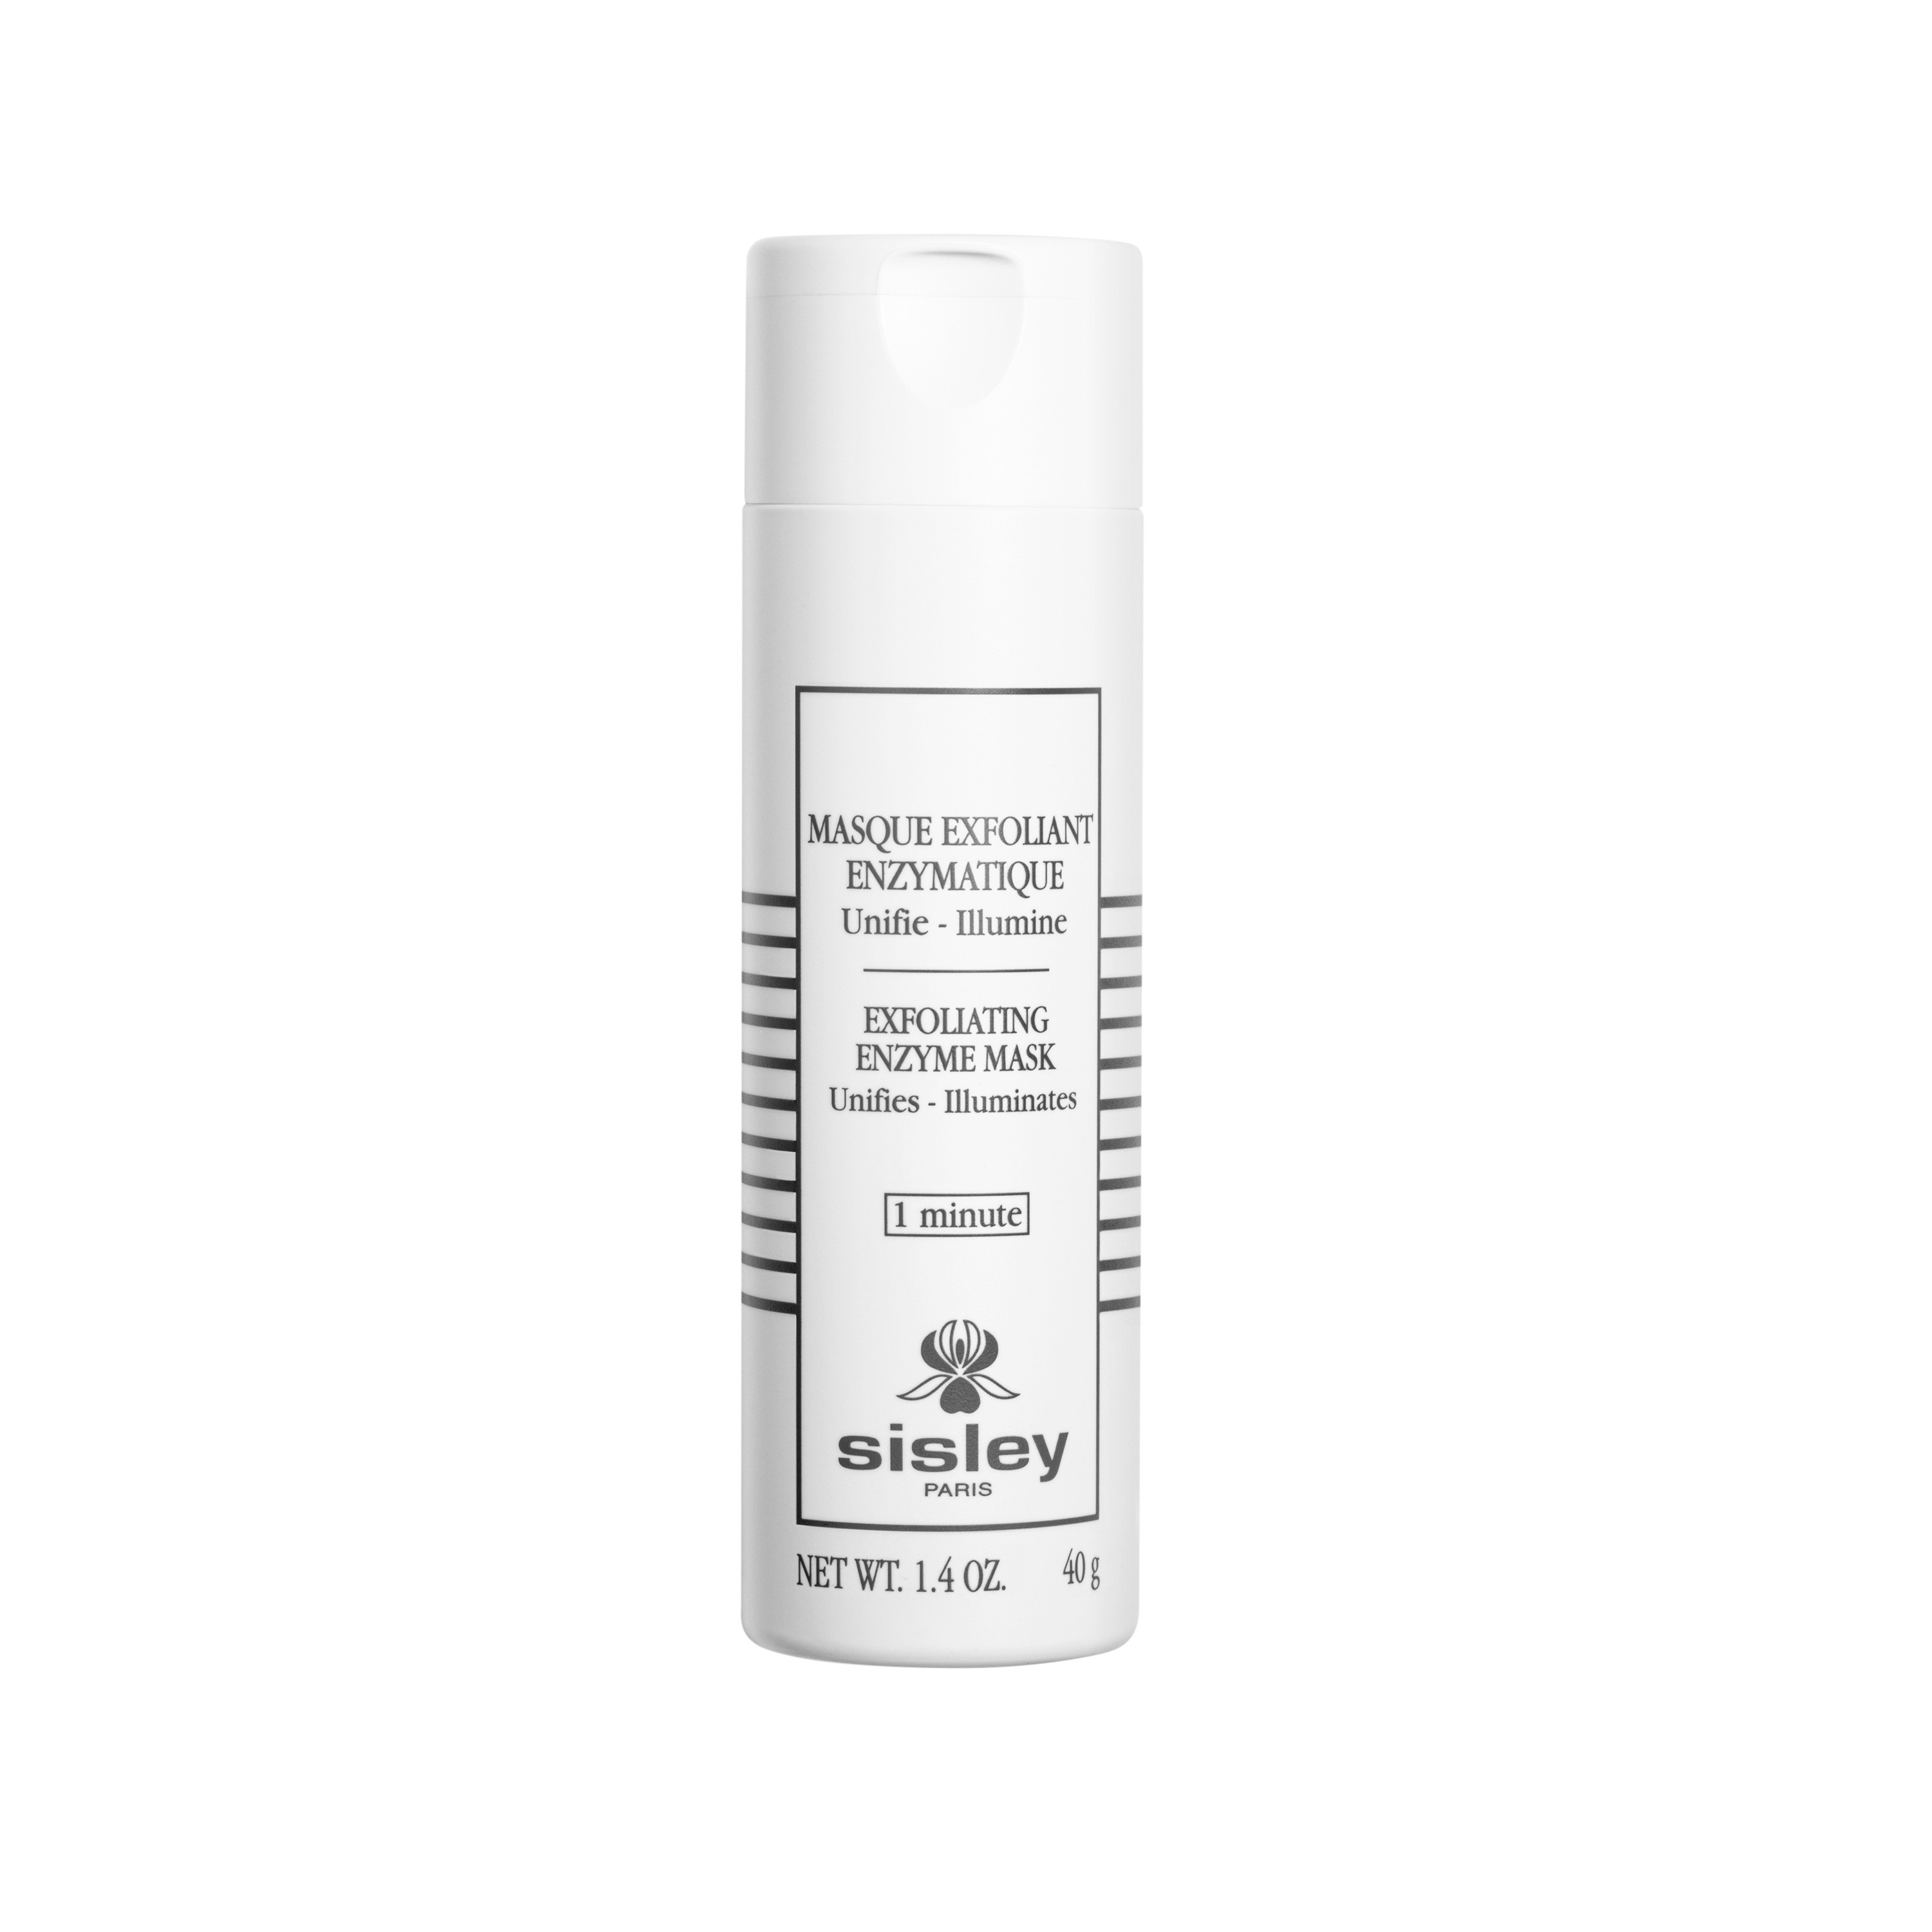 Sisley Paris - Maschera esfoliante enzimatica 1 minuto, Bianco, large image number 0